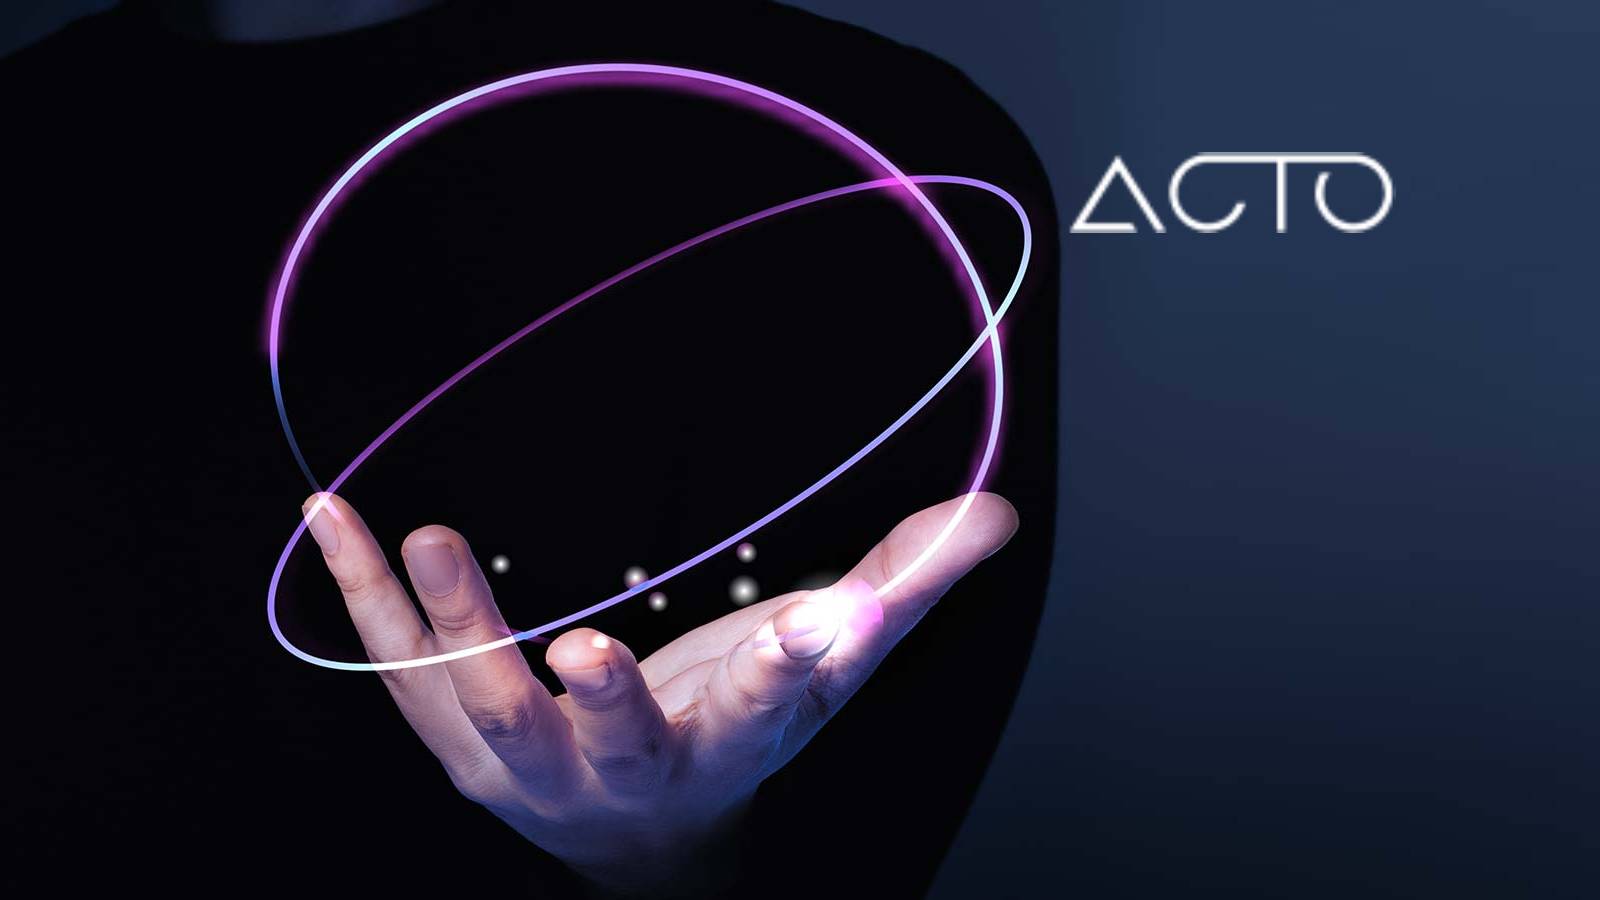 ACTO Integrates Life Sciences Education Platform With Veeva CRM